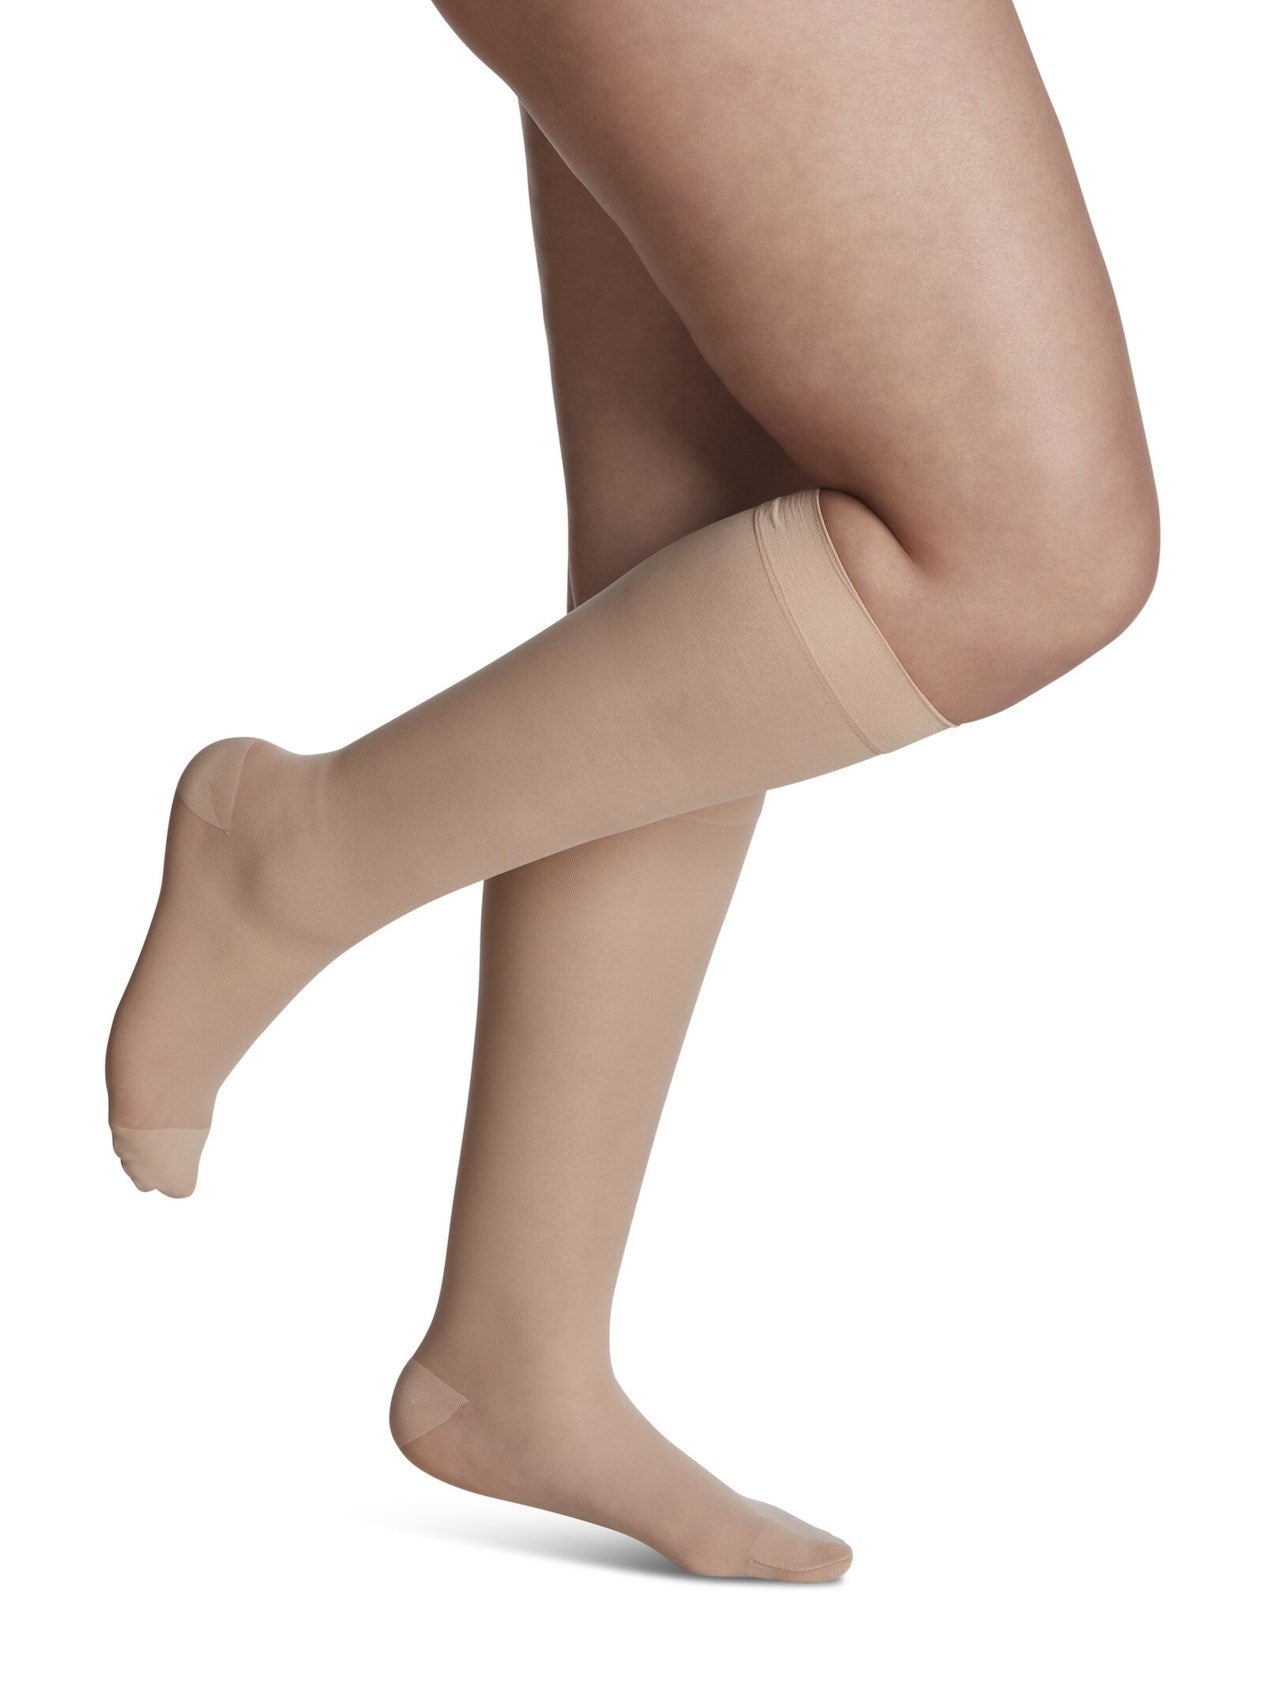 Sigvaris 780 Sheer Compression Socks 20-30 mmHg Calf High for Women Closed Toe